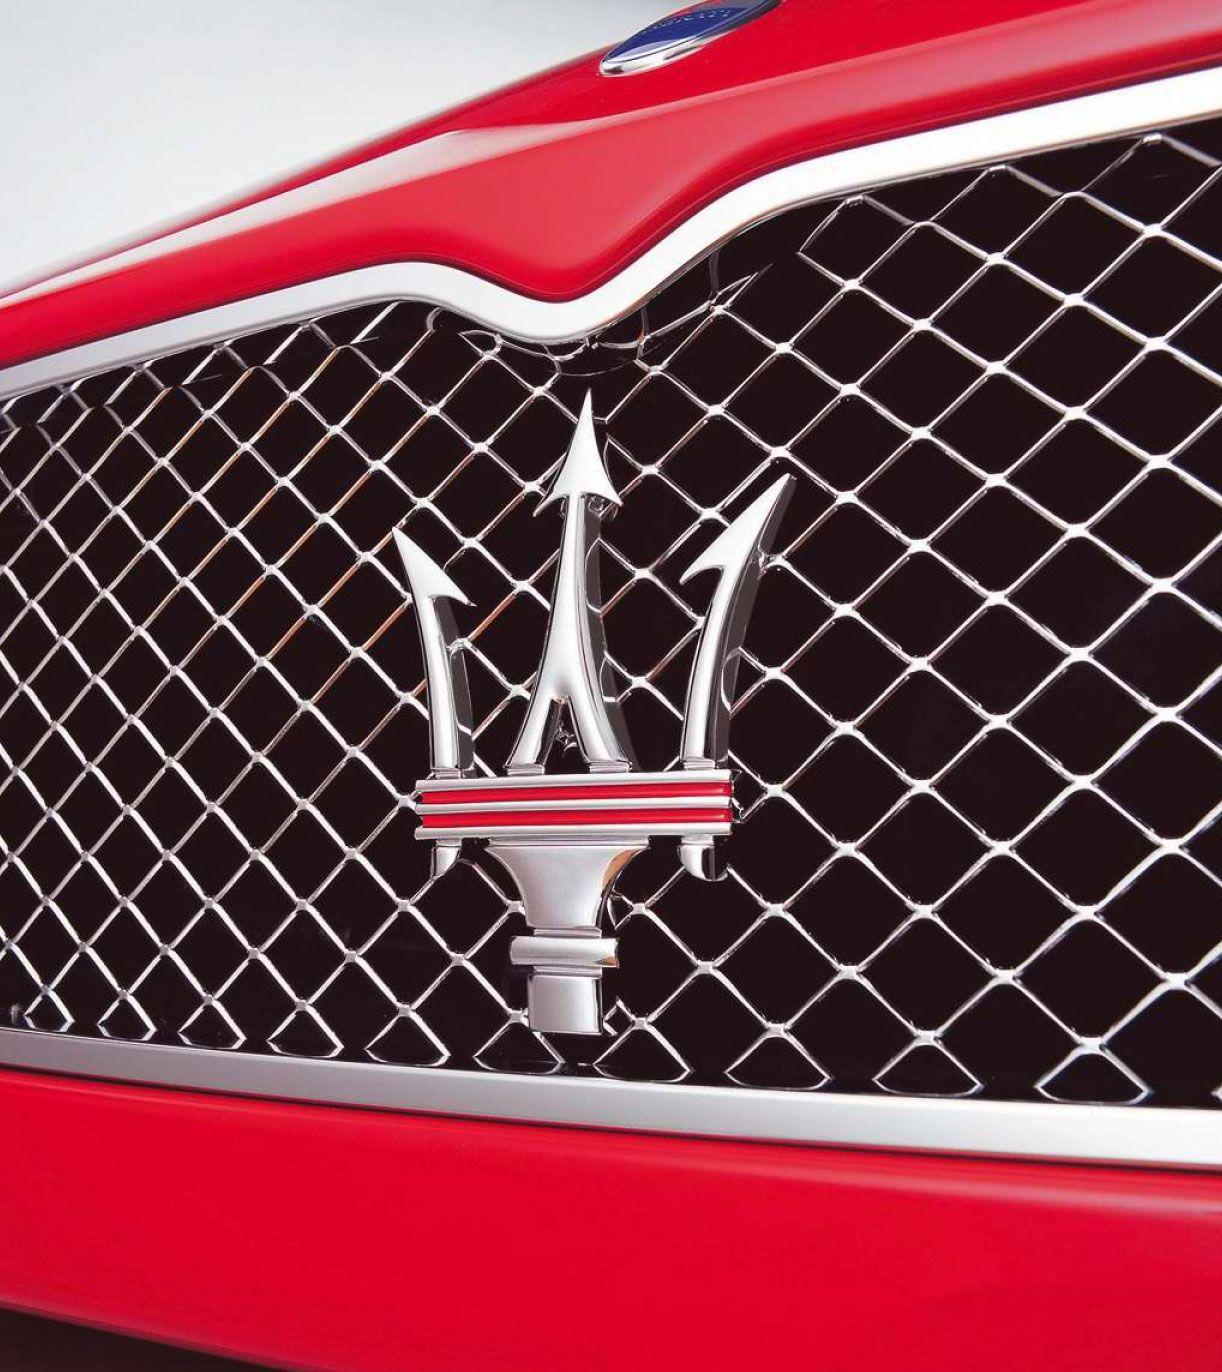 Trident Car Logo - Maserati Logo, Maserati Car Symbol Meaning and History | Car Brand ...